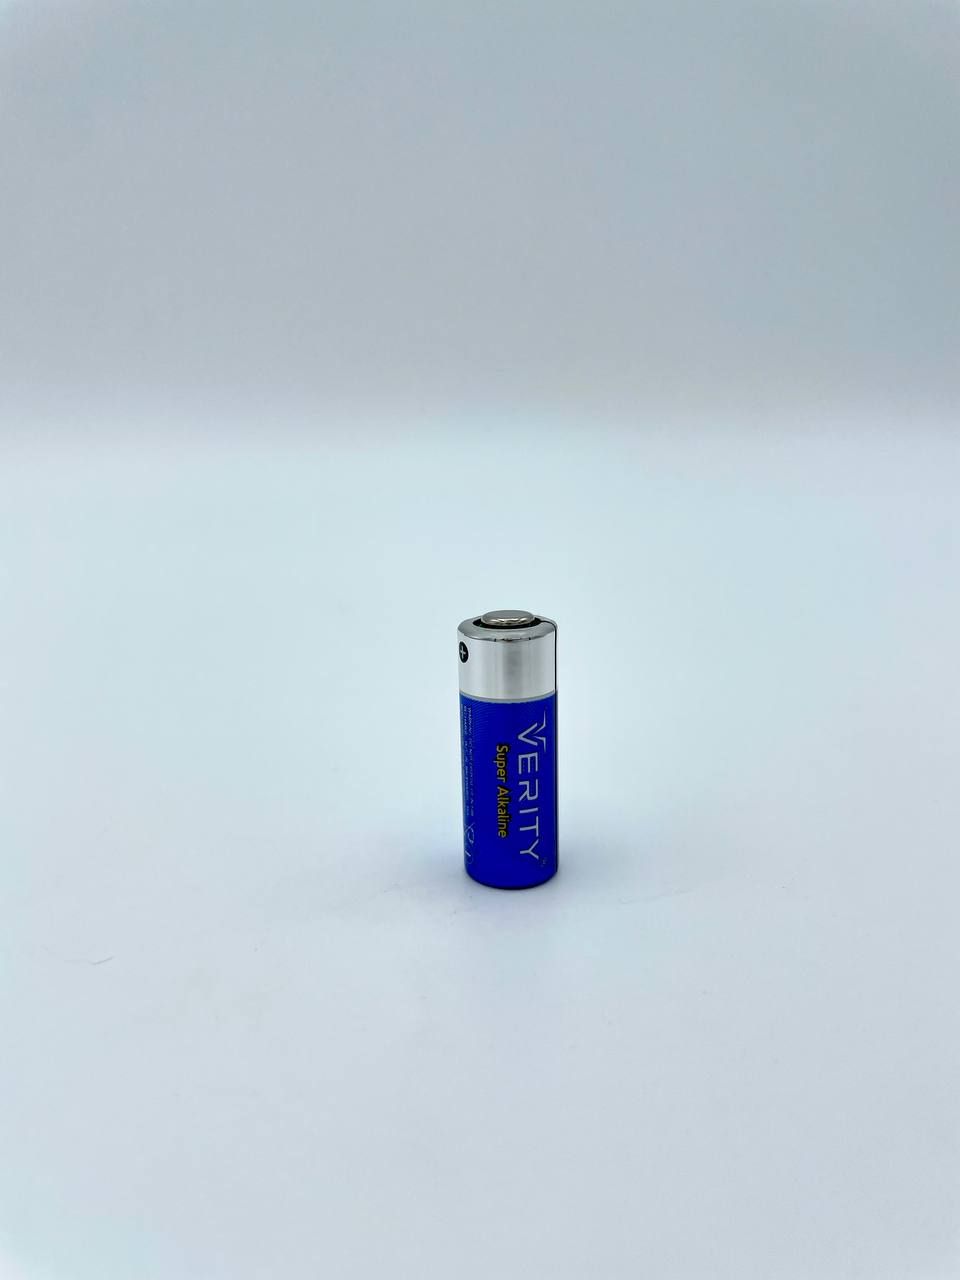 باتری ریموتی وریتی مدل VERITY 23A Super Alkaline